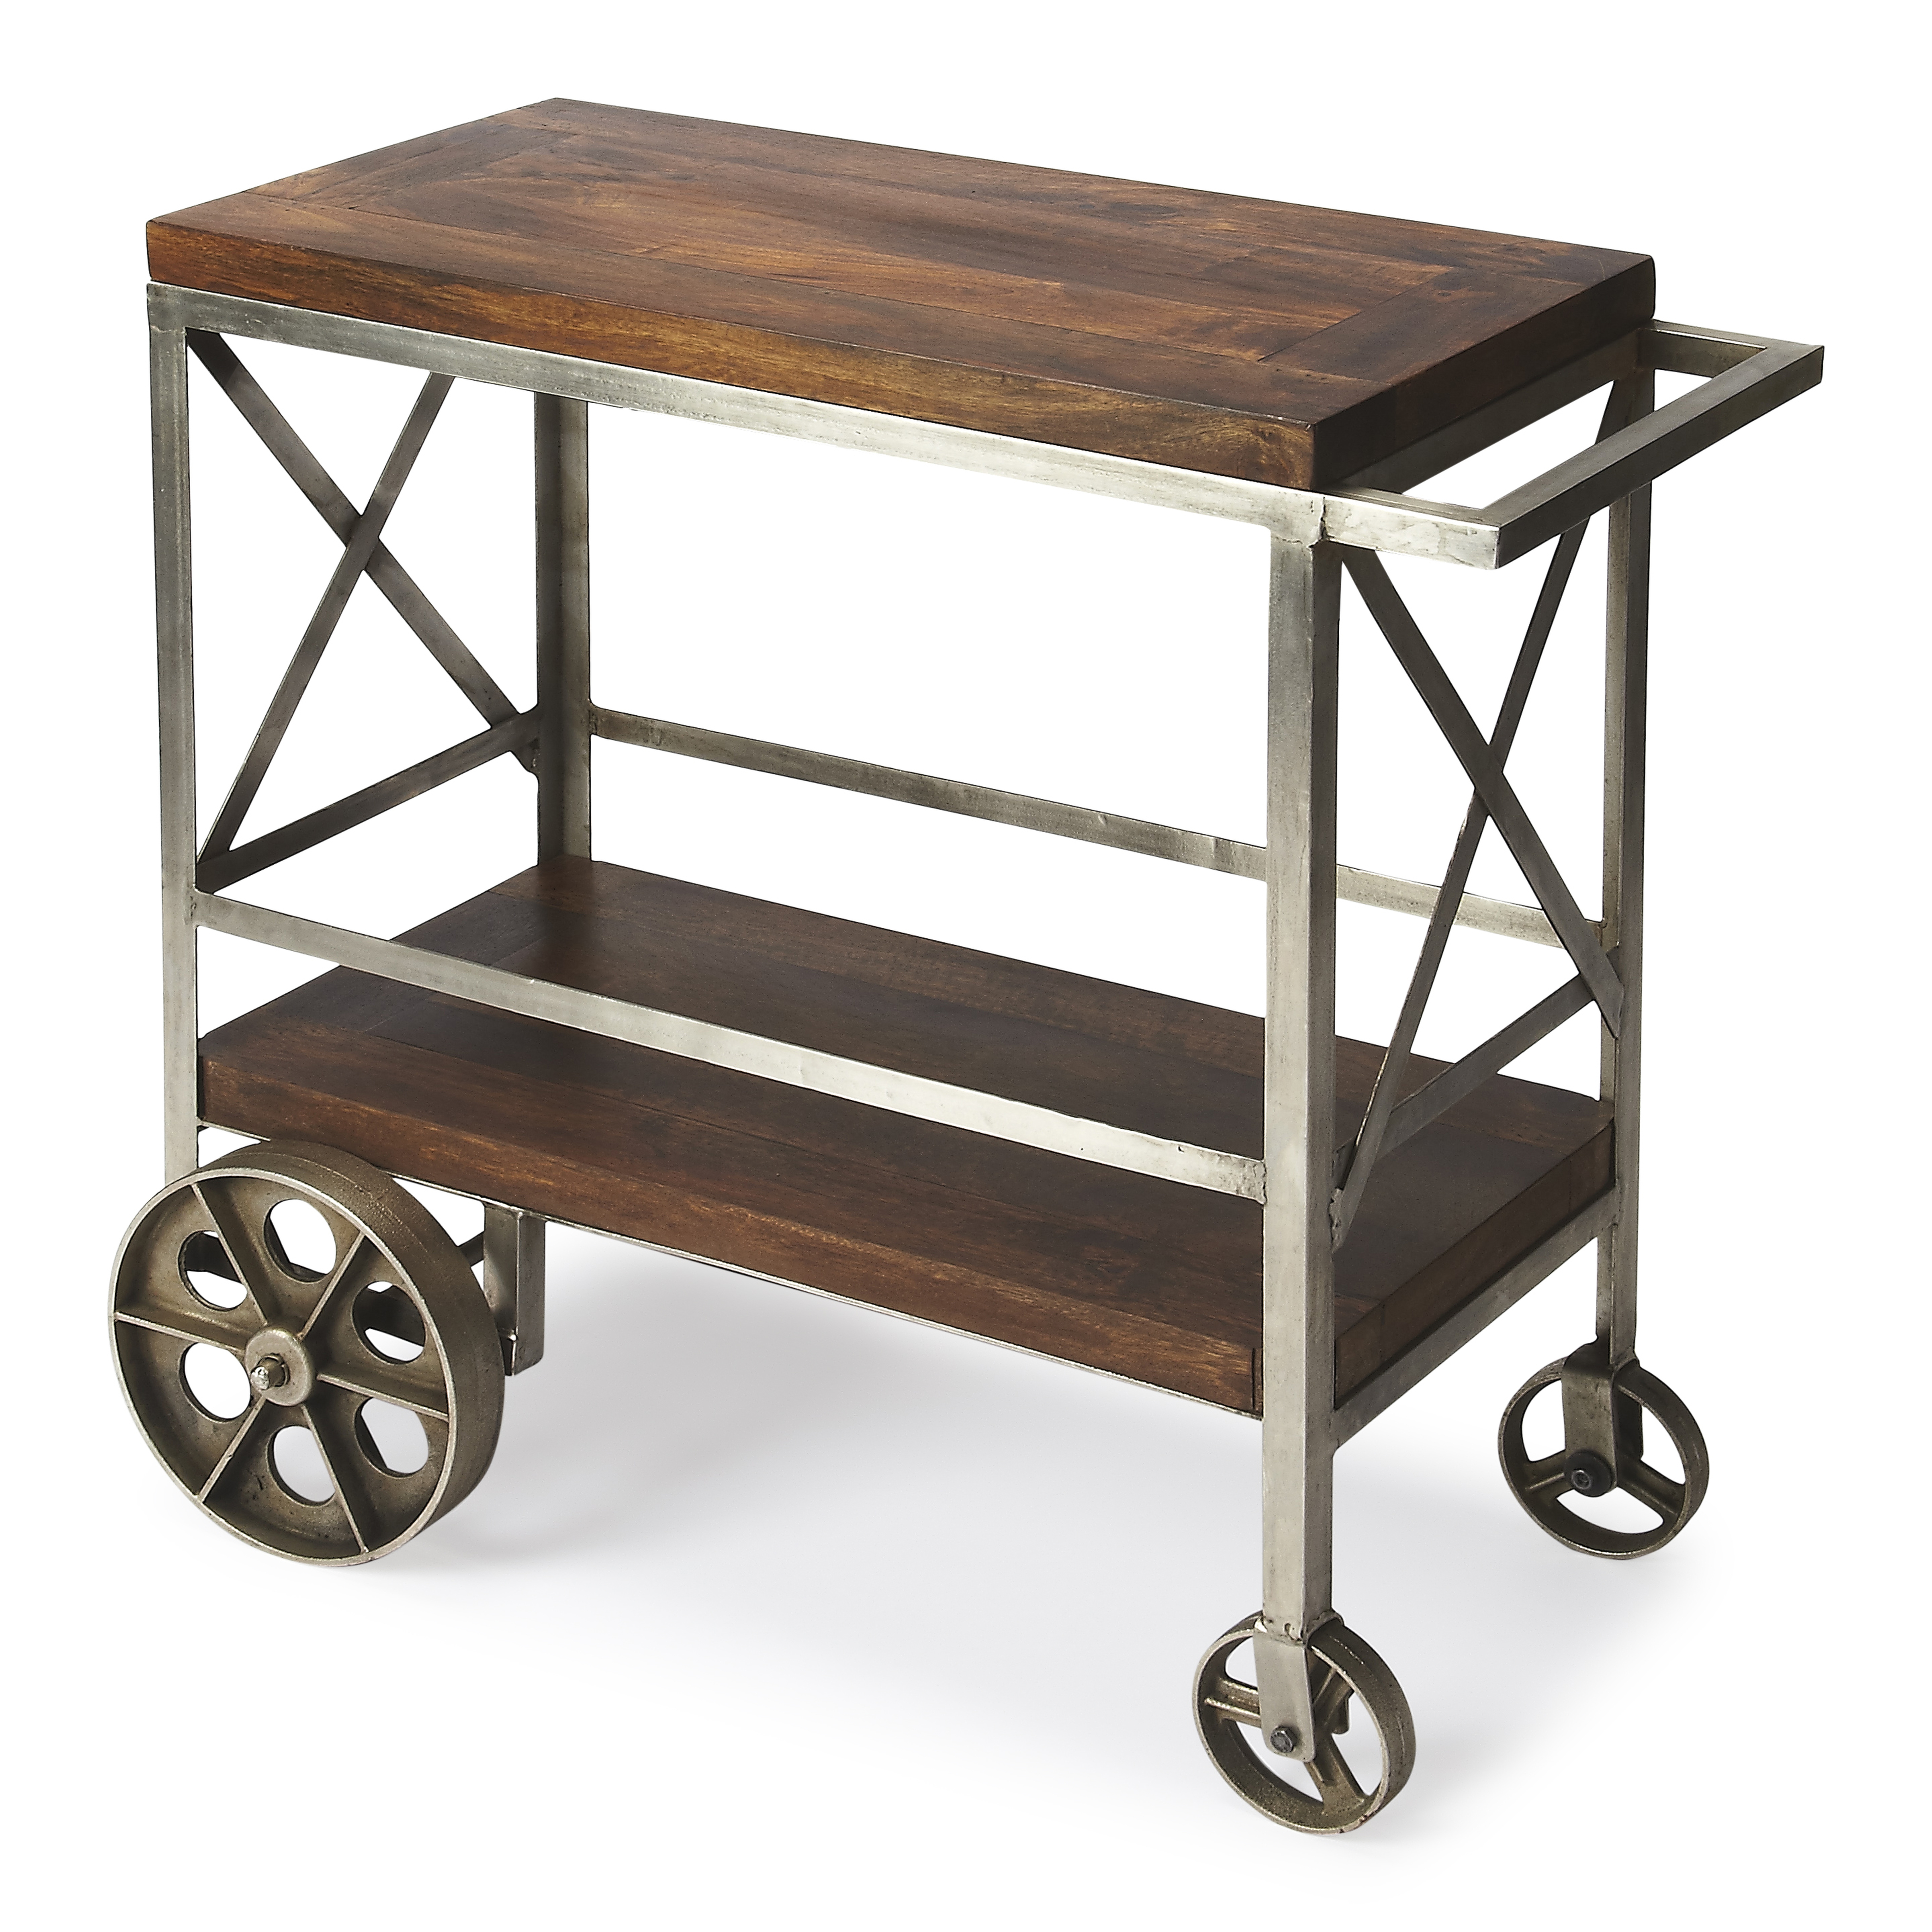 Merrill Industrial Chic Bar Cart - Blake Studio